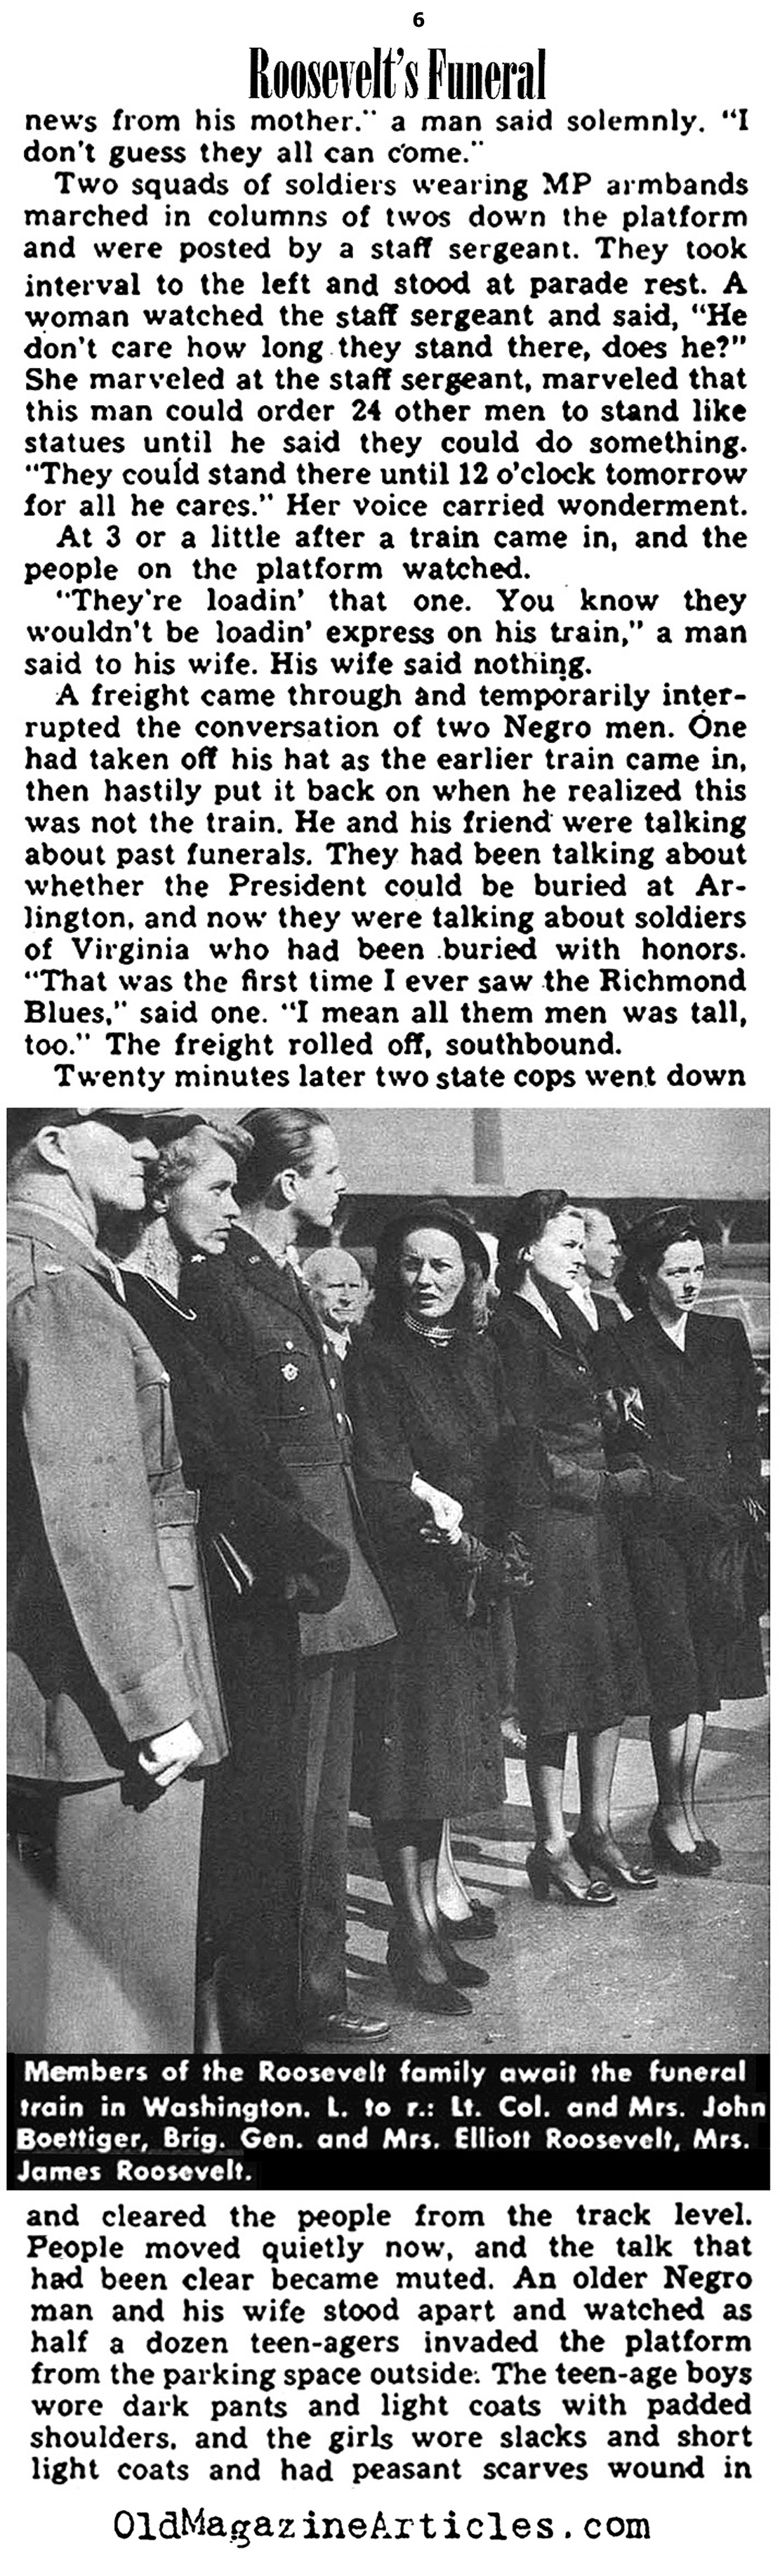 FDR's Funeral (Yank Magazine, 1945)